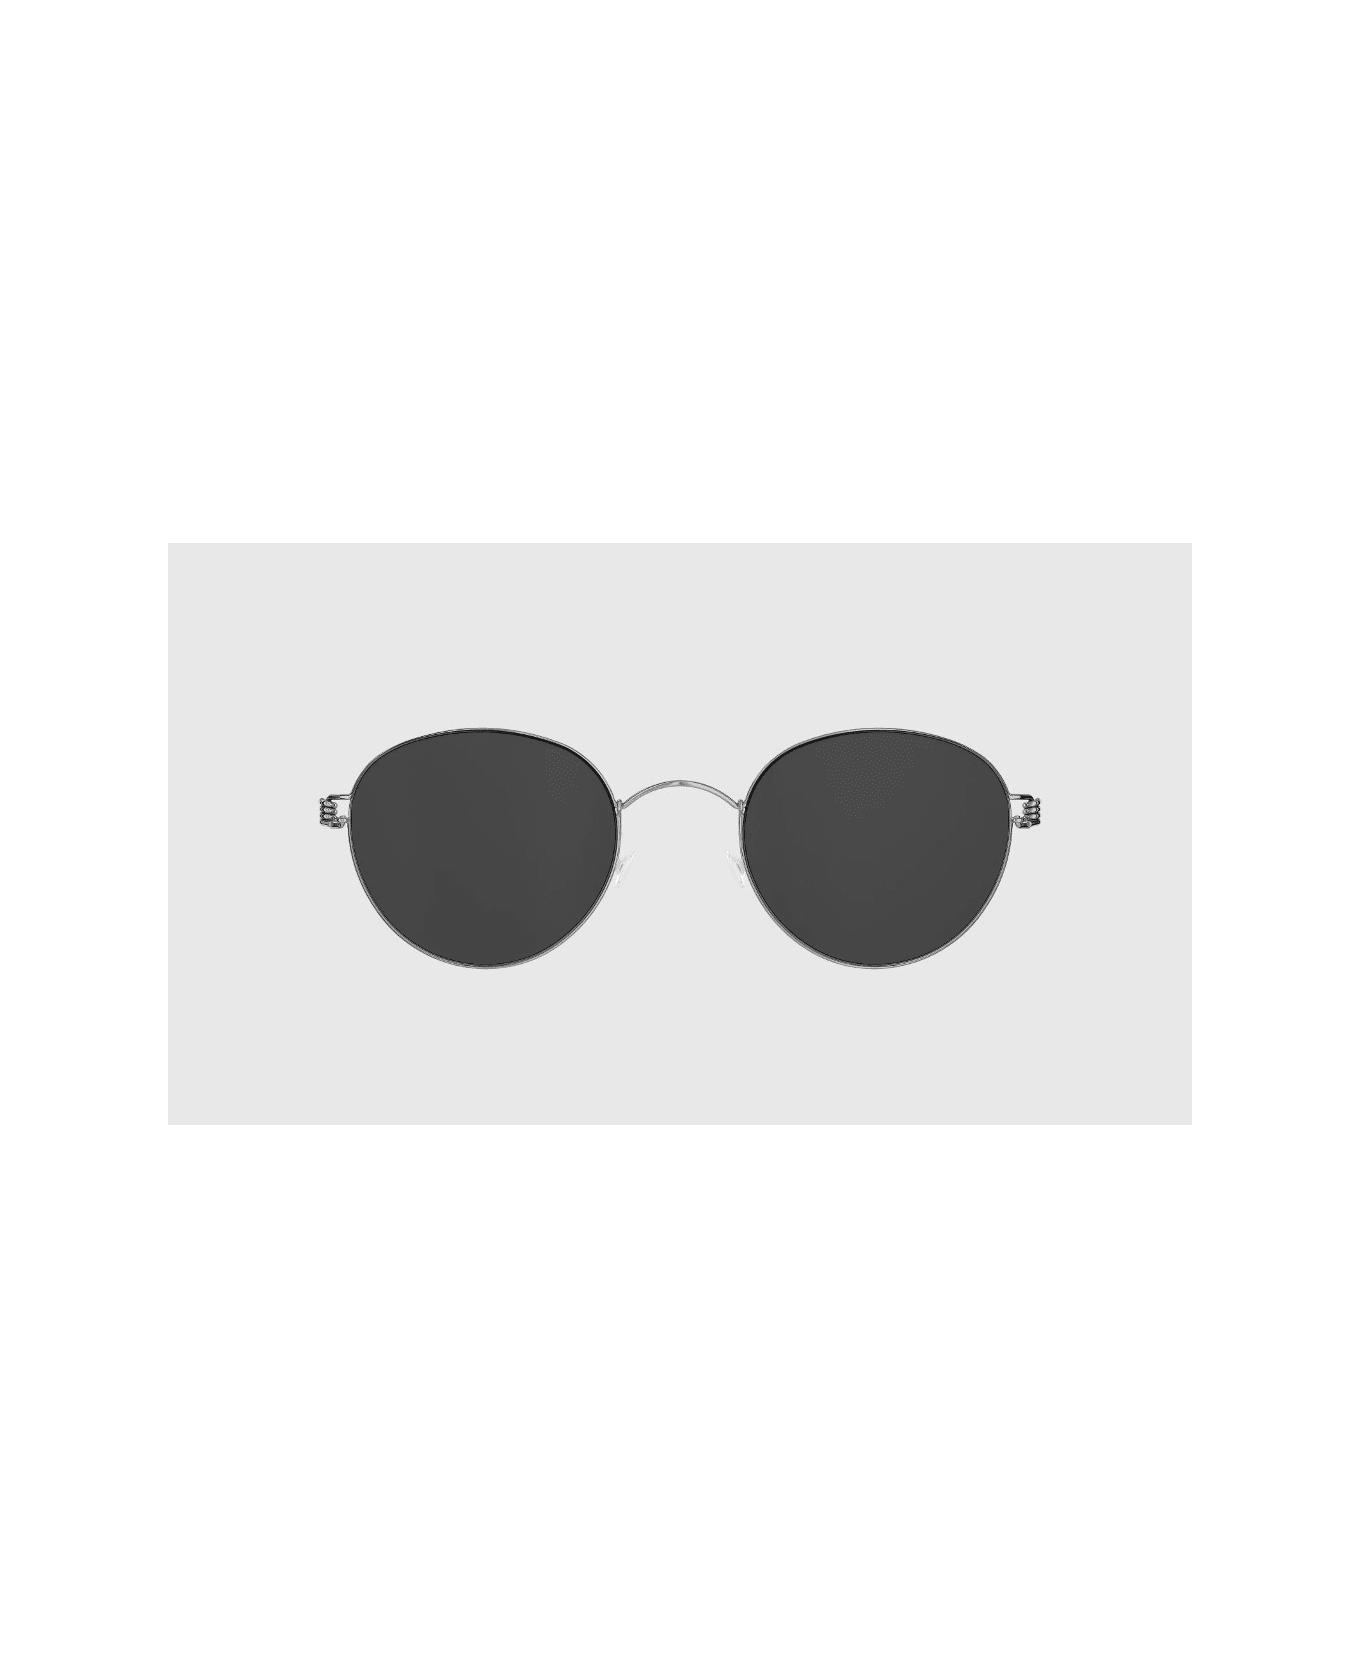 LINDBERG SR 8213 10 Sunglasses